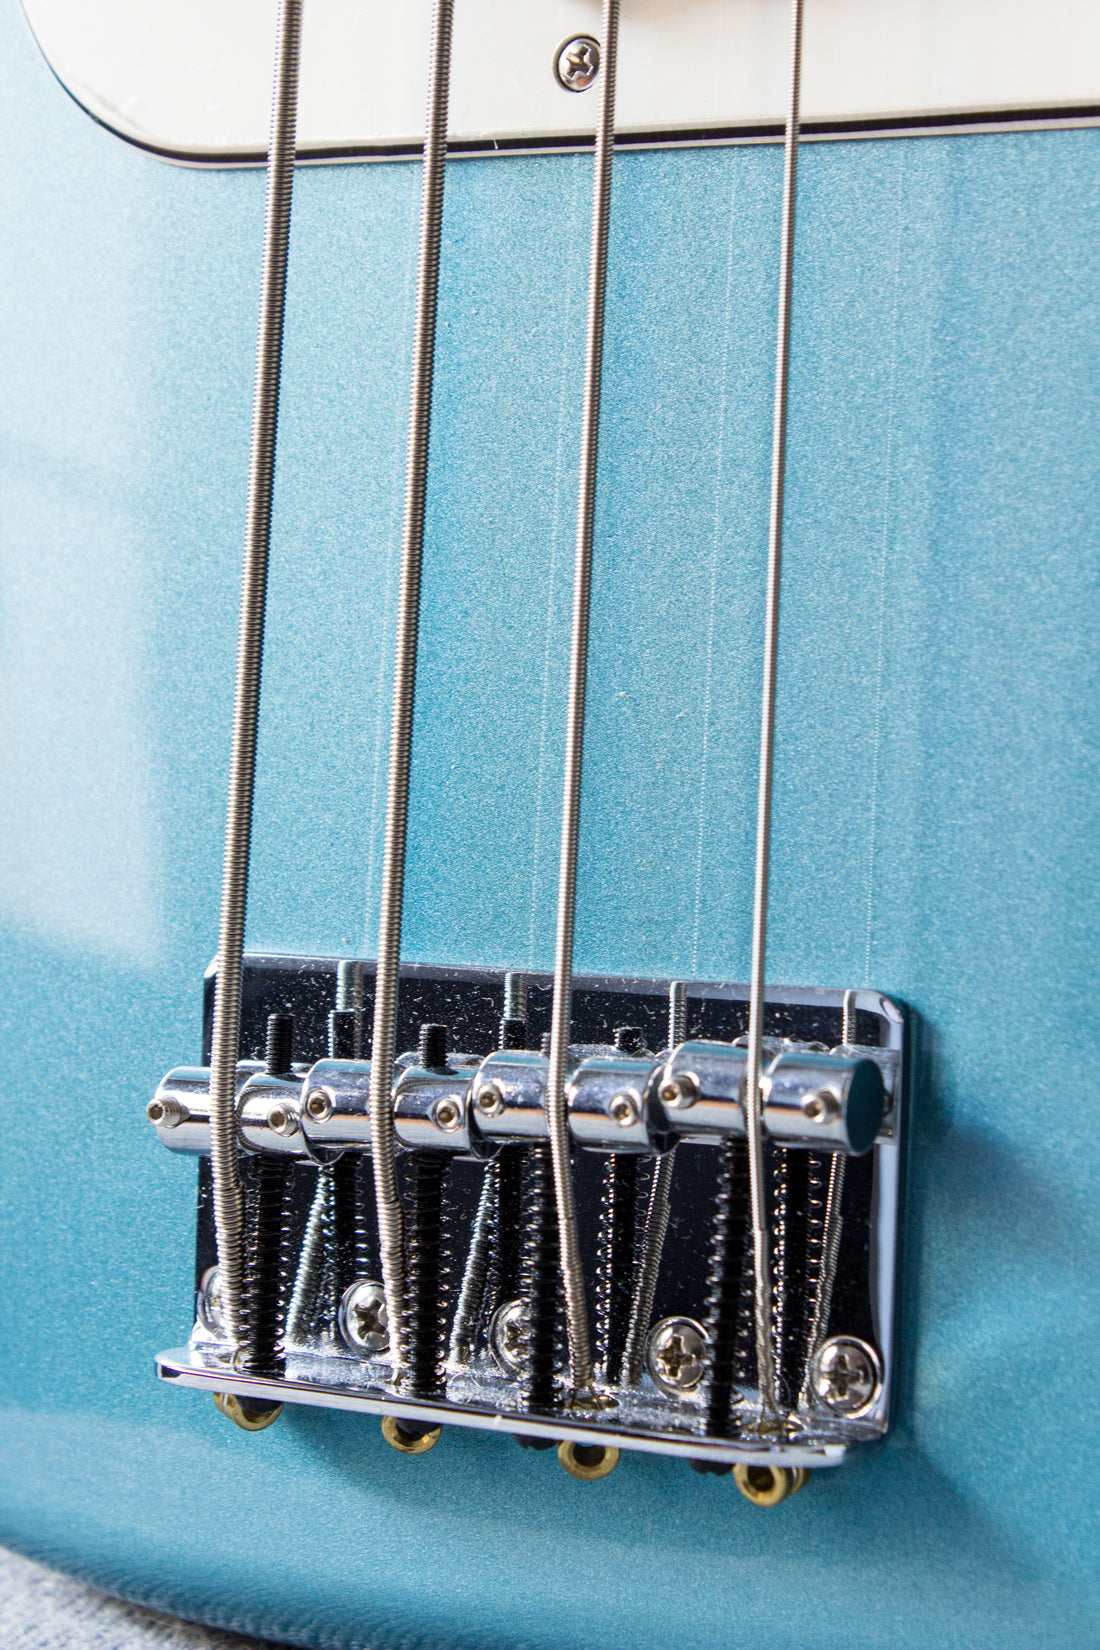 Fender Player Series Precision Bass Tidepool 2019